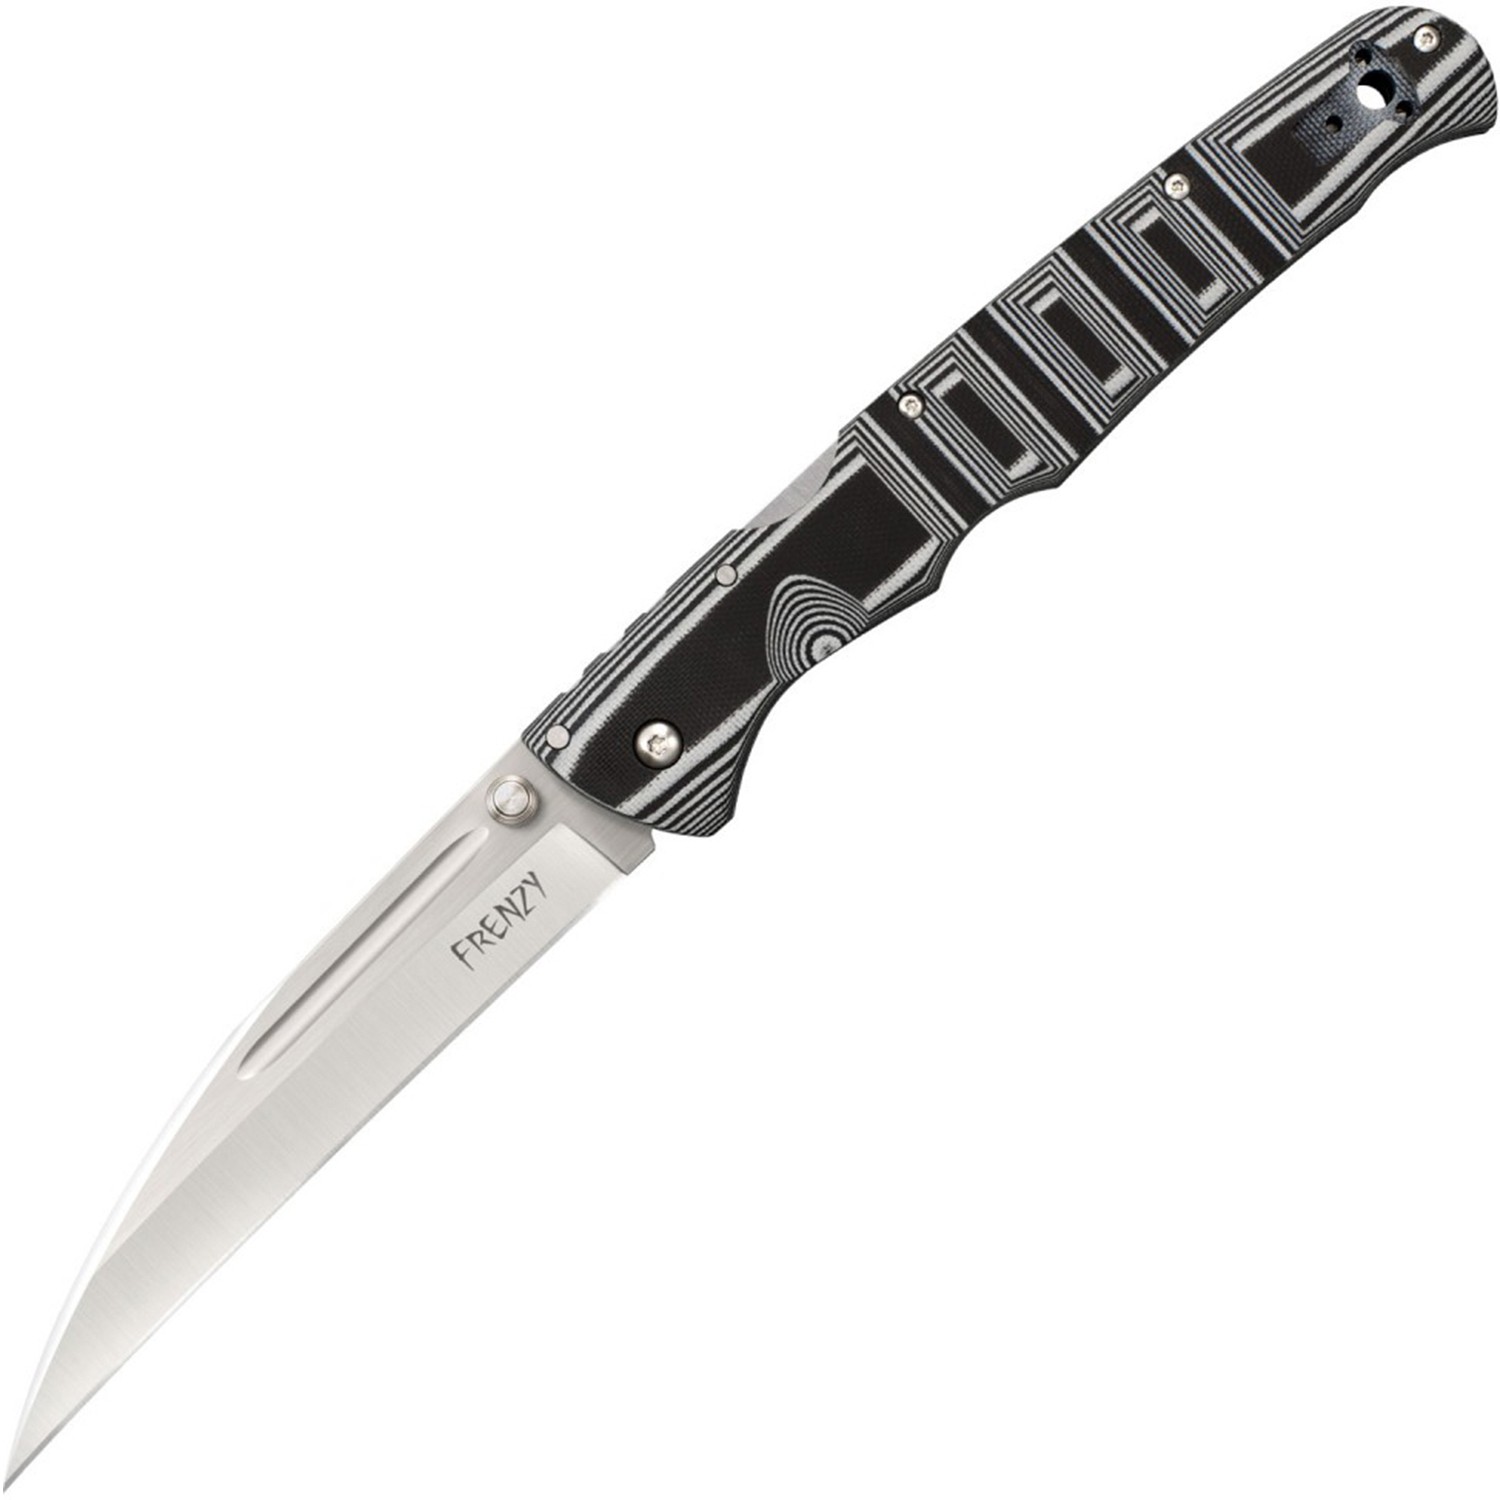 Нож Cold Steel Frenzy 3 gray black складной сталь CTS XHP - фото 1